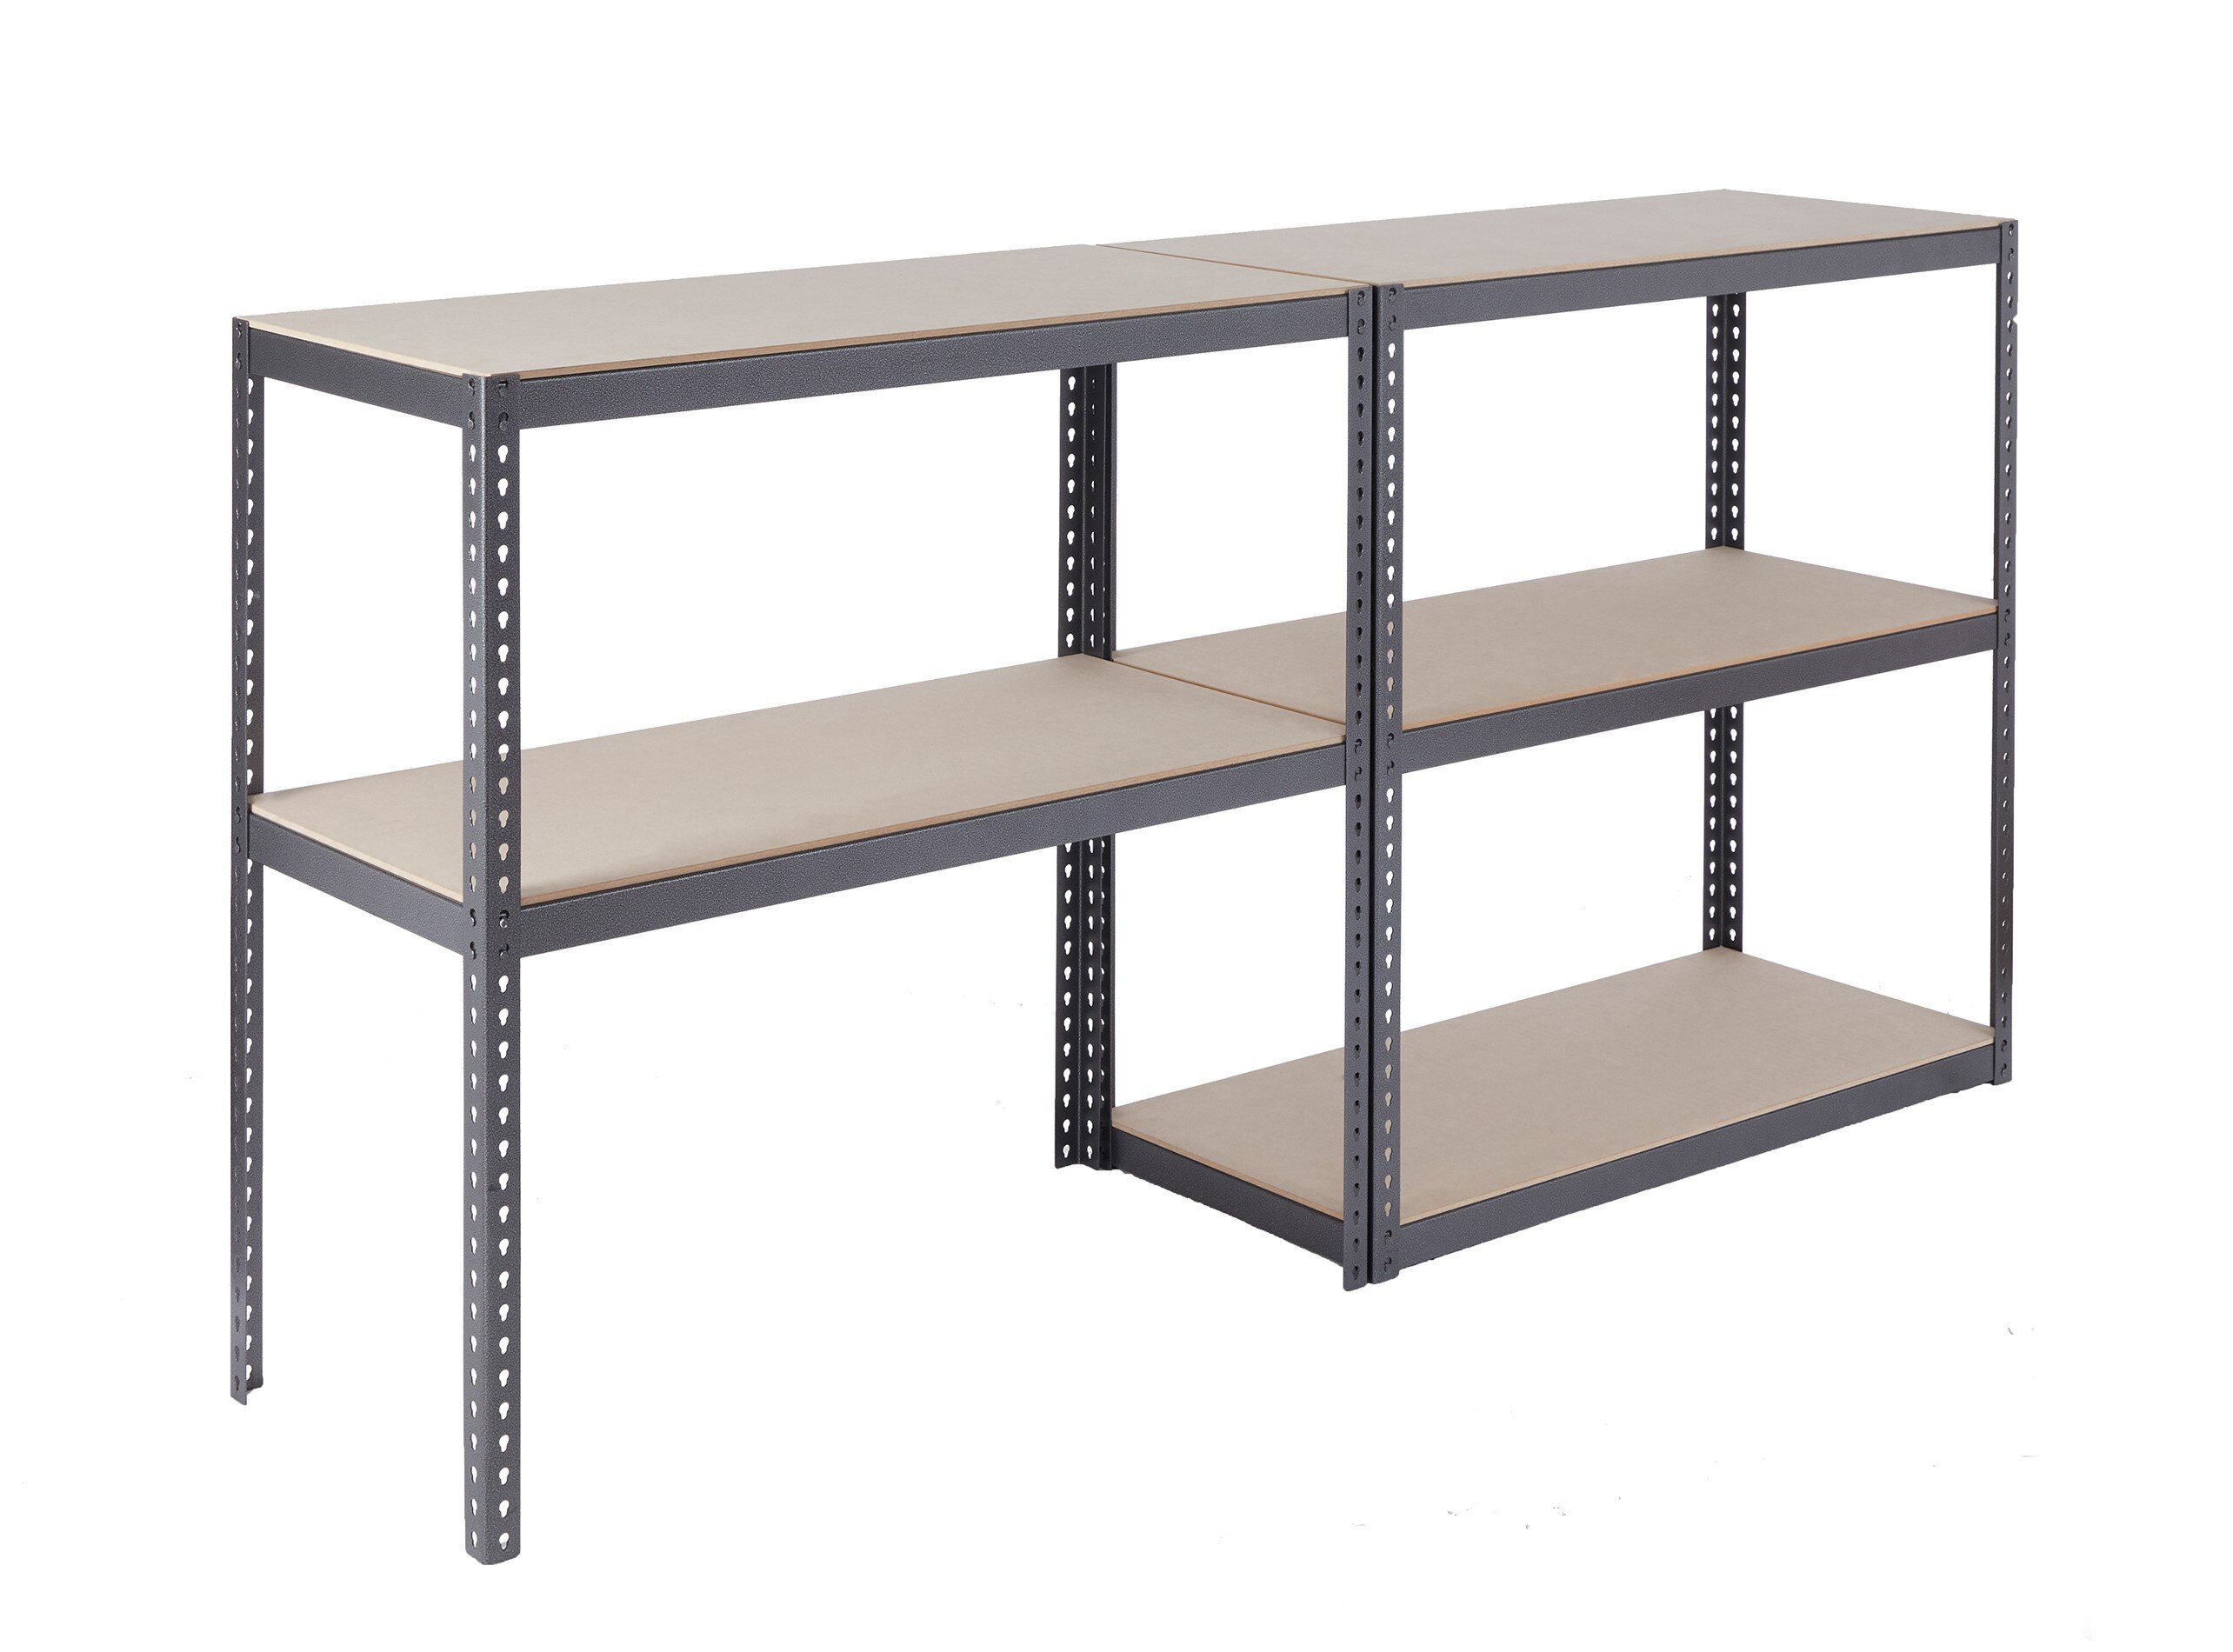 Budget Shelves Stainless Steel Shelving - 36 x 20 x 71